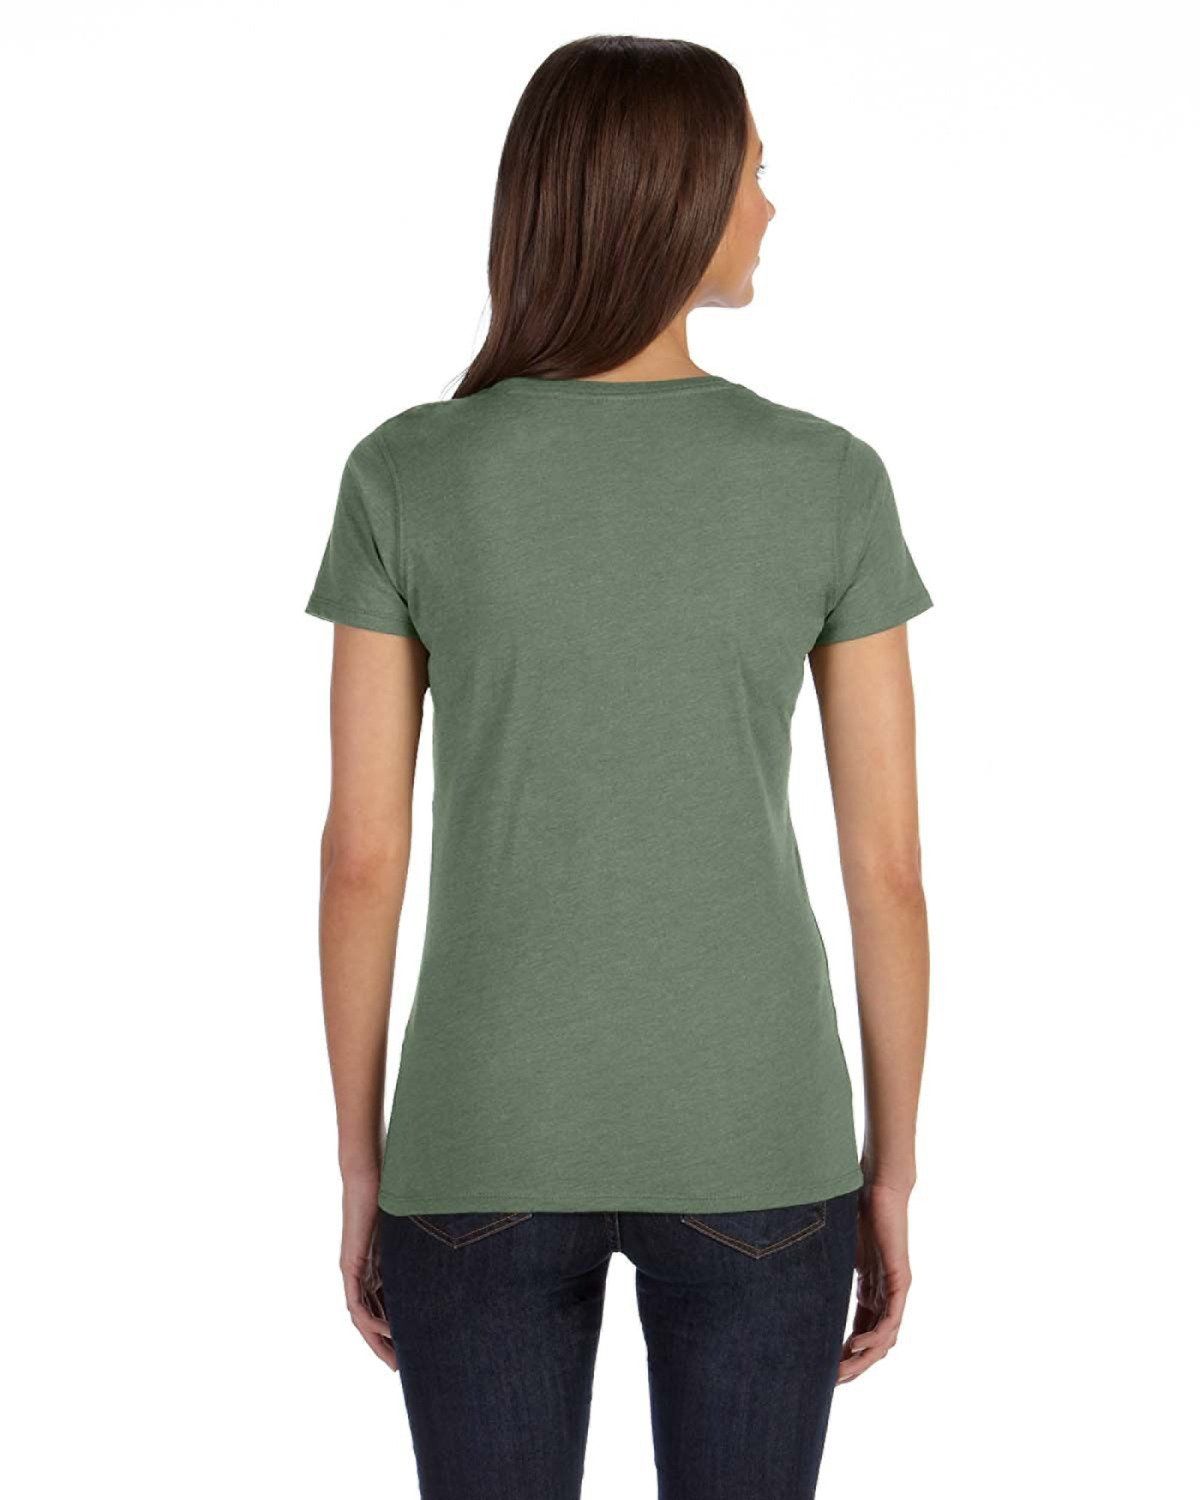 'econscious EC3800 Ladies' Blended Eco T-Shirt'